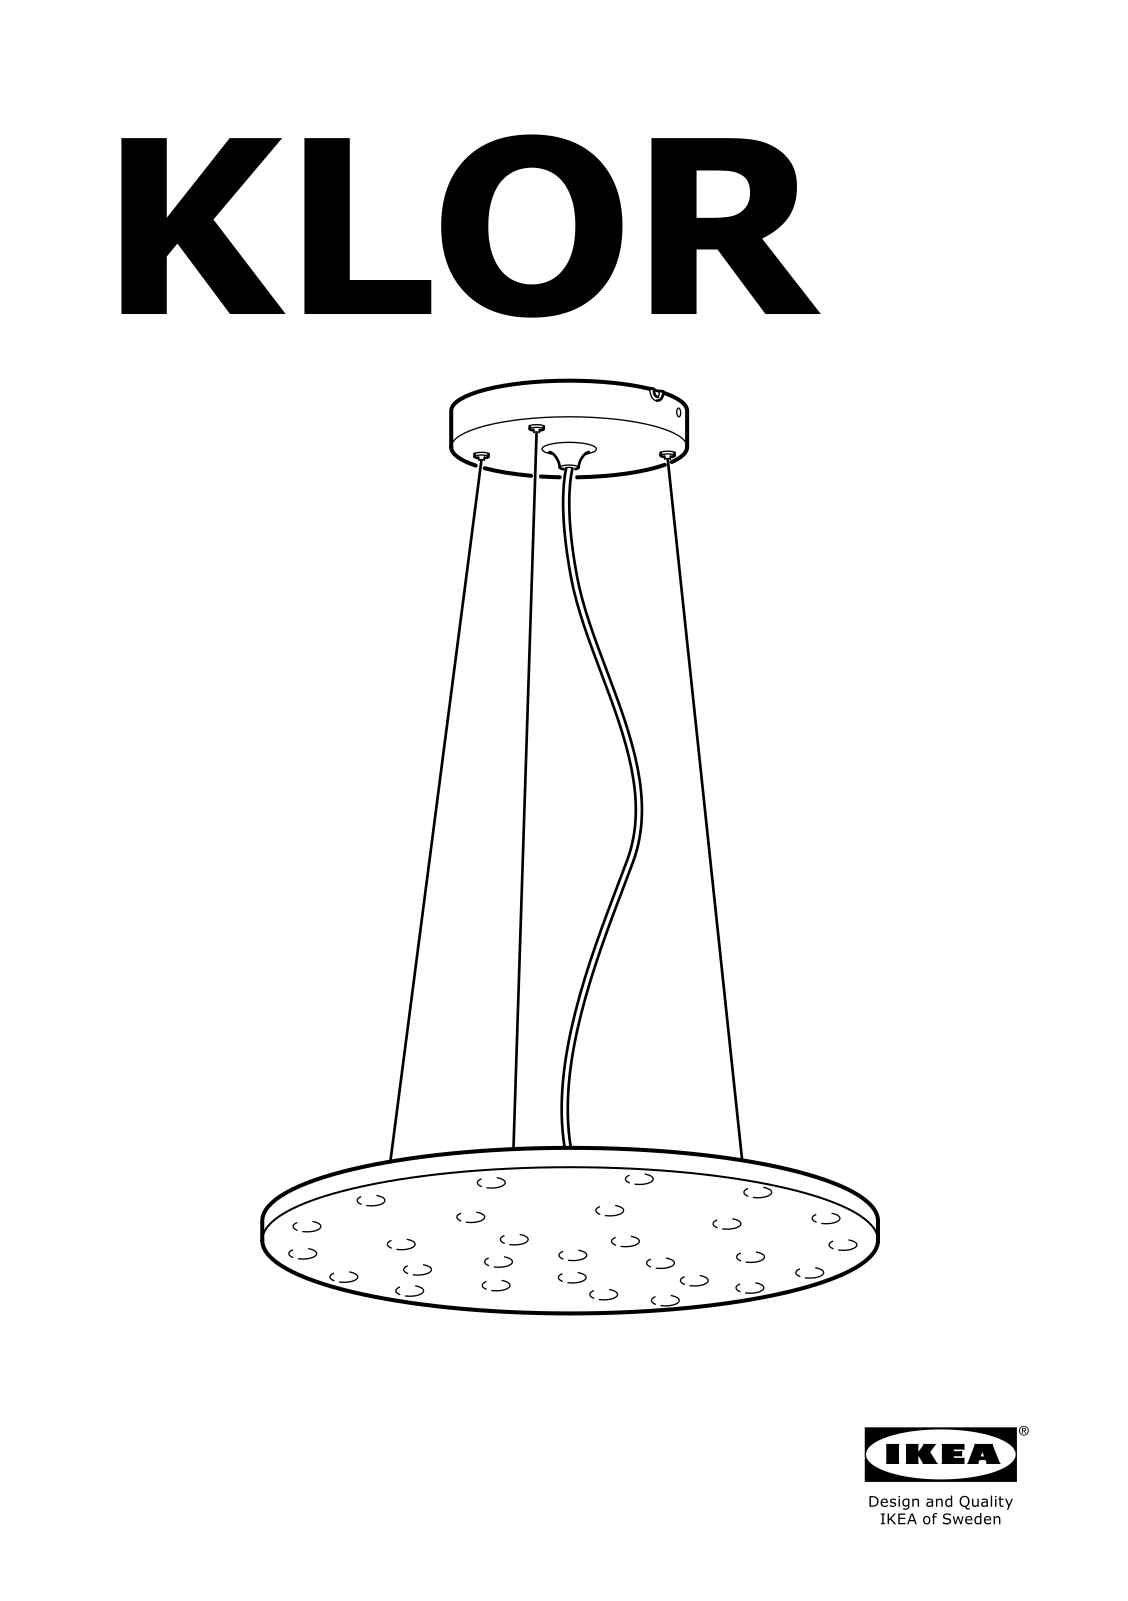 IKEA KLOR User Manual